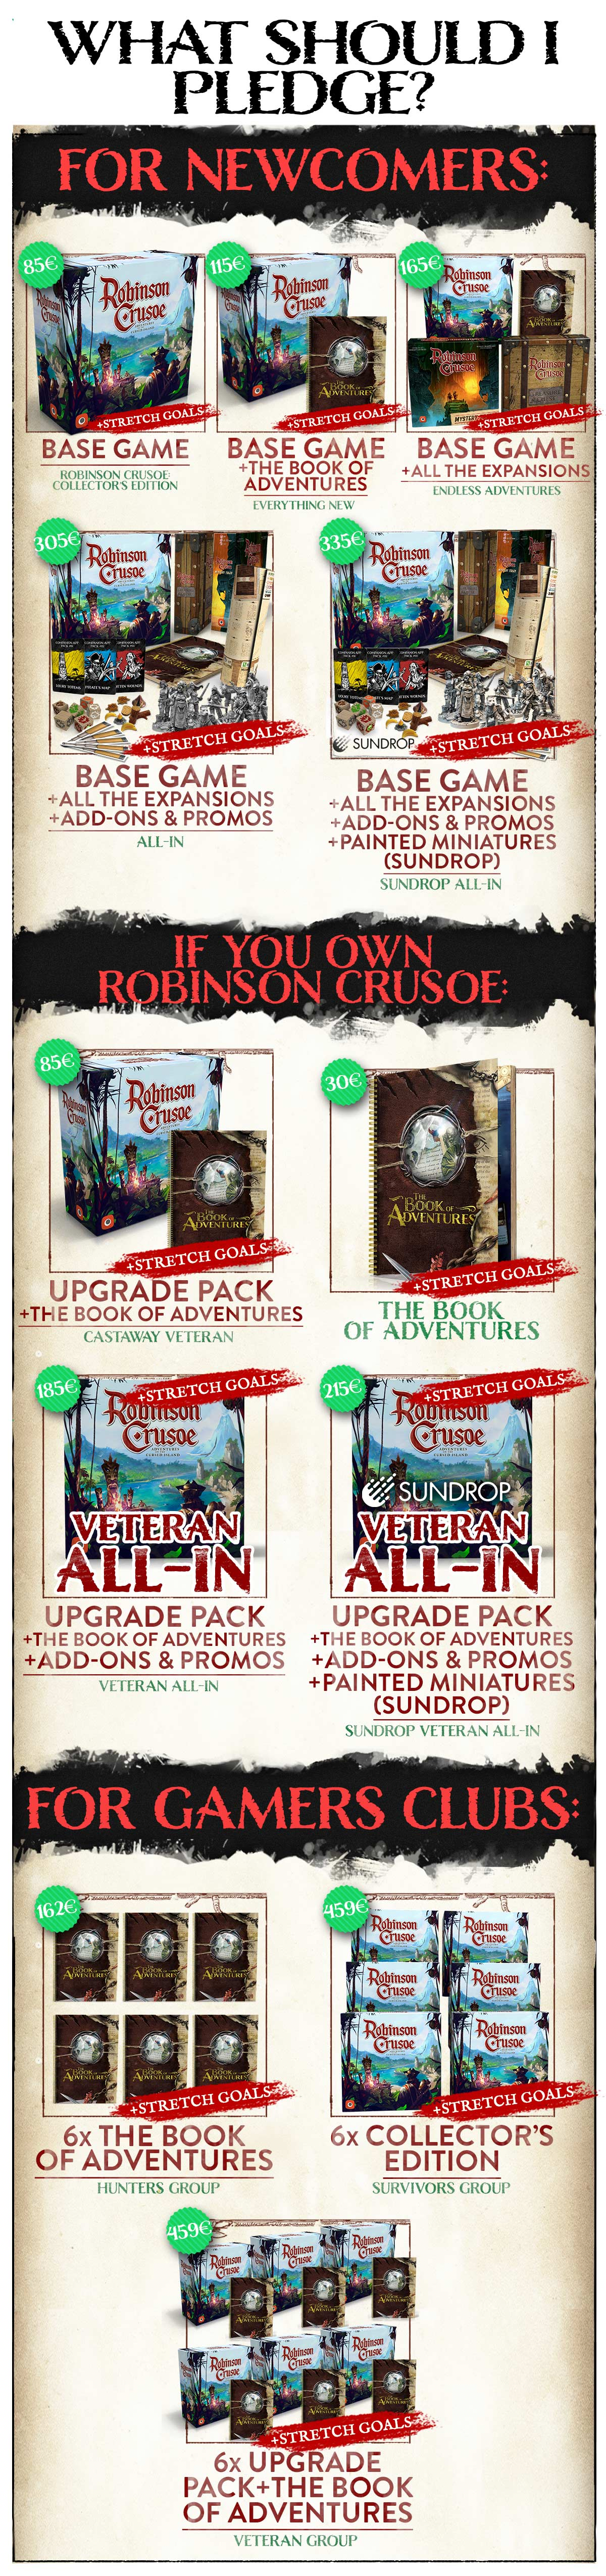 Robinson Crusoe: Adventures on the Cursed Island Collectors Edition  Kickstarter Board Game - The Game Steward